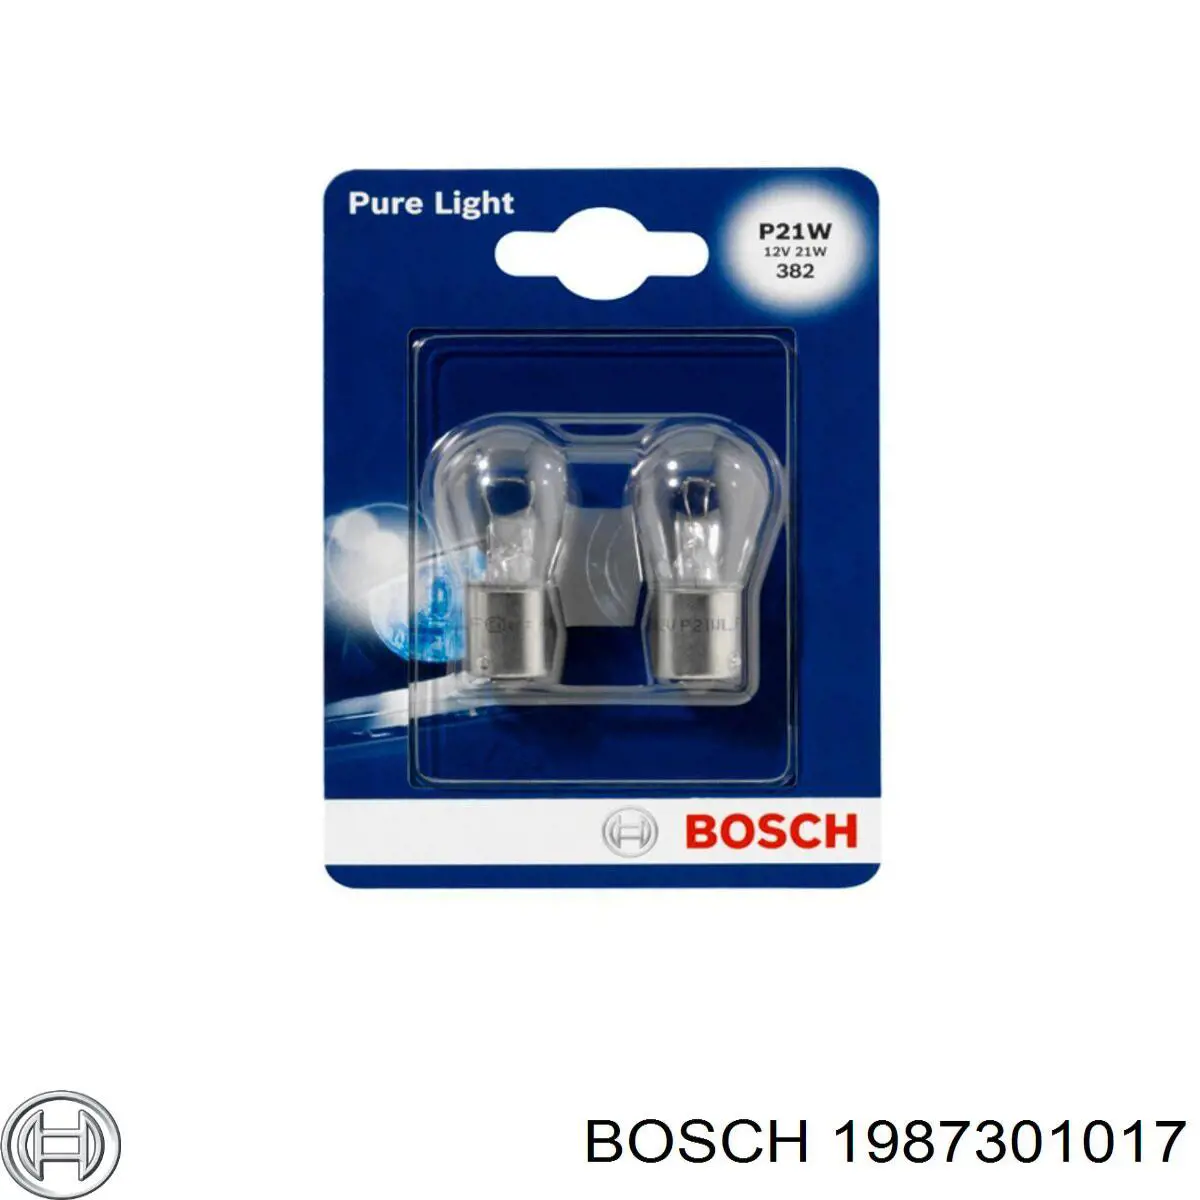 1 987 301 017 Bosch bombilla